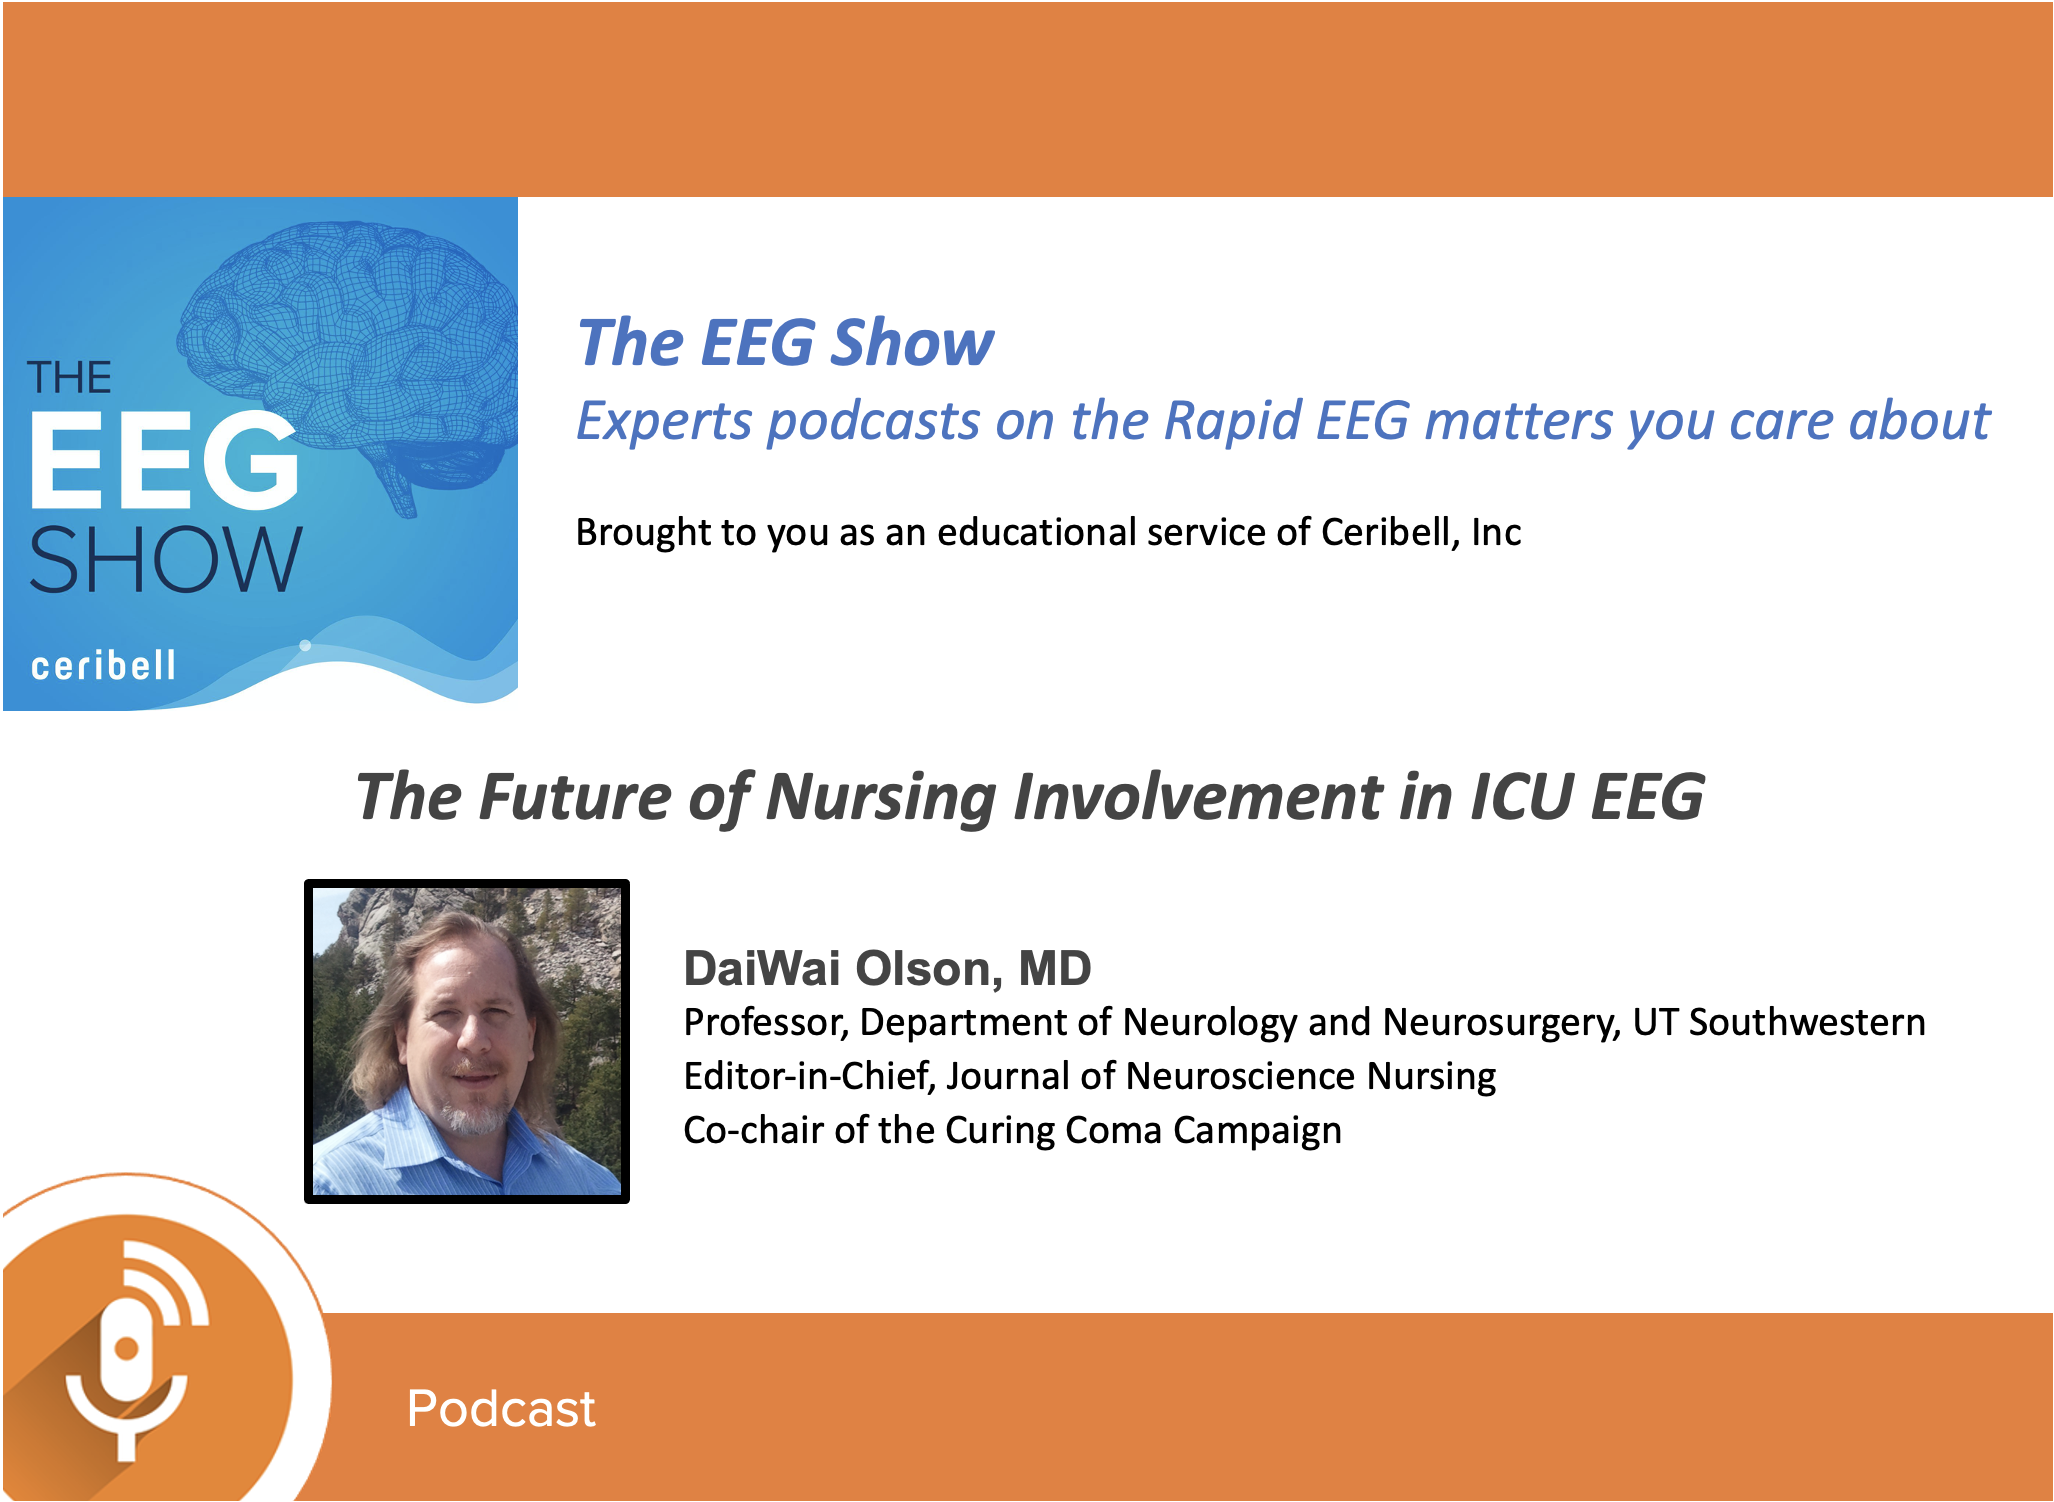 The Future of Nursing Involvement in ICU EEG with Dr. DaiWai Olson